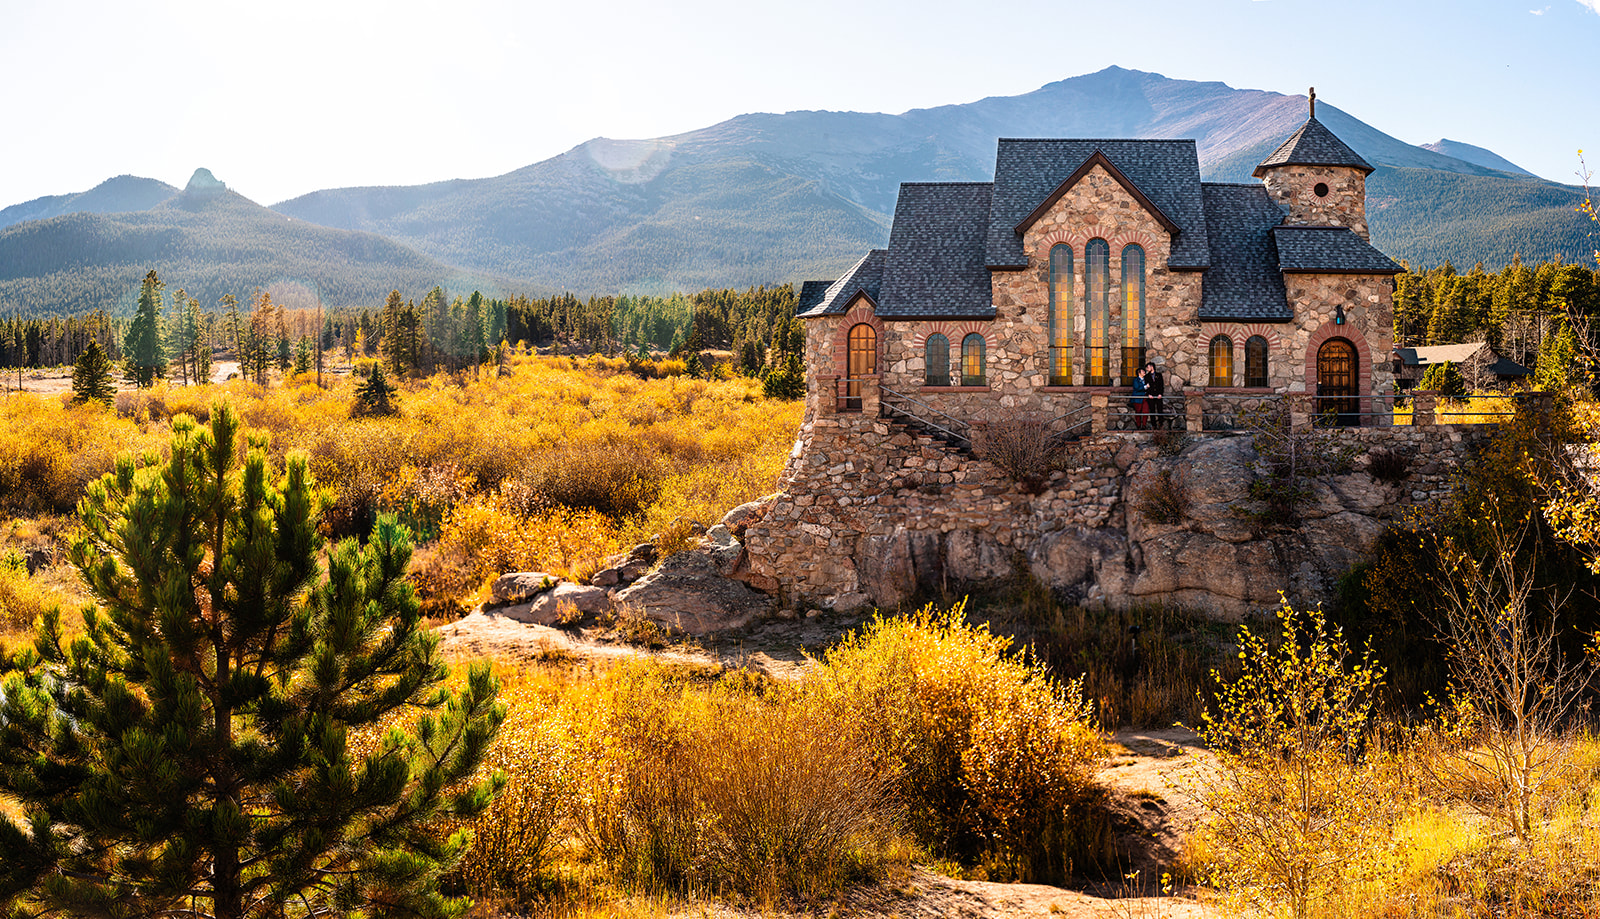 Stunning church in the mountains of Colorado near Brainard Lake